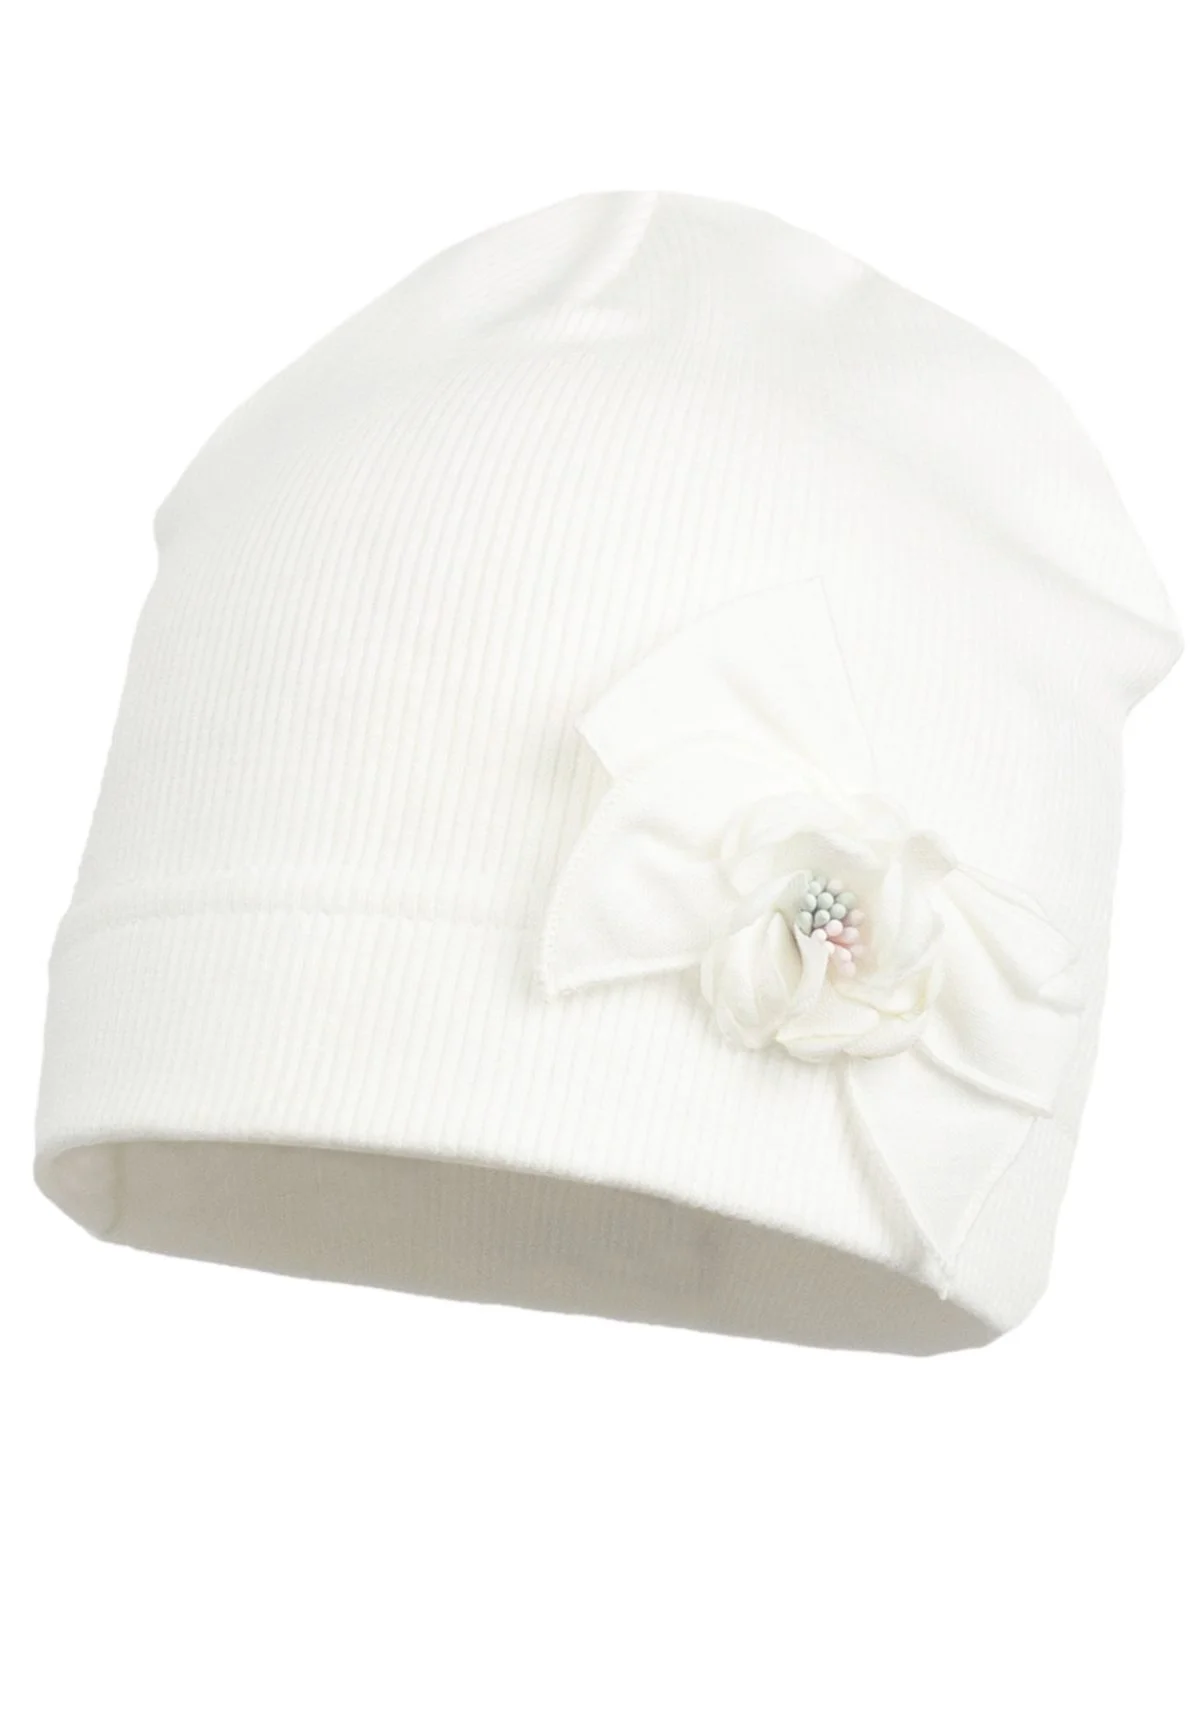 JAMIKS Čiapka s mašľou a kvetom biela Shira Hat with bow and flower white JWF016 | Welcomebaby.sk